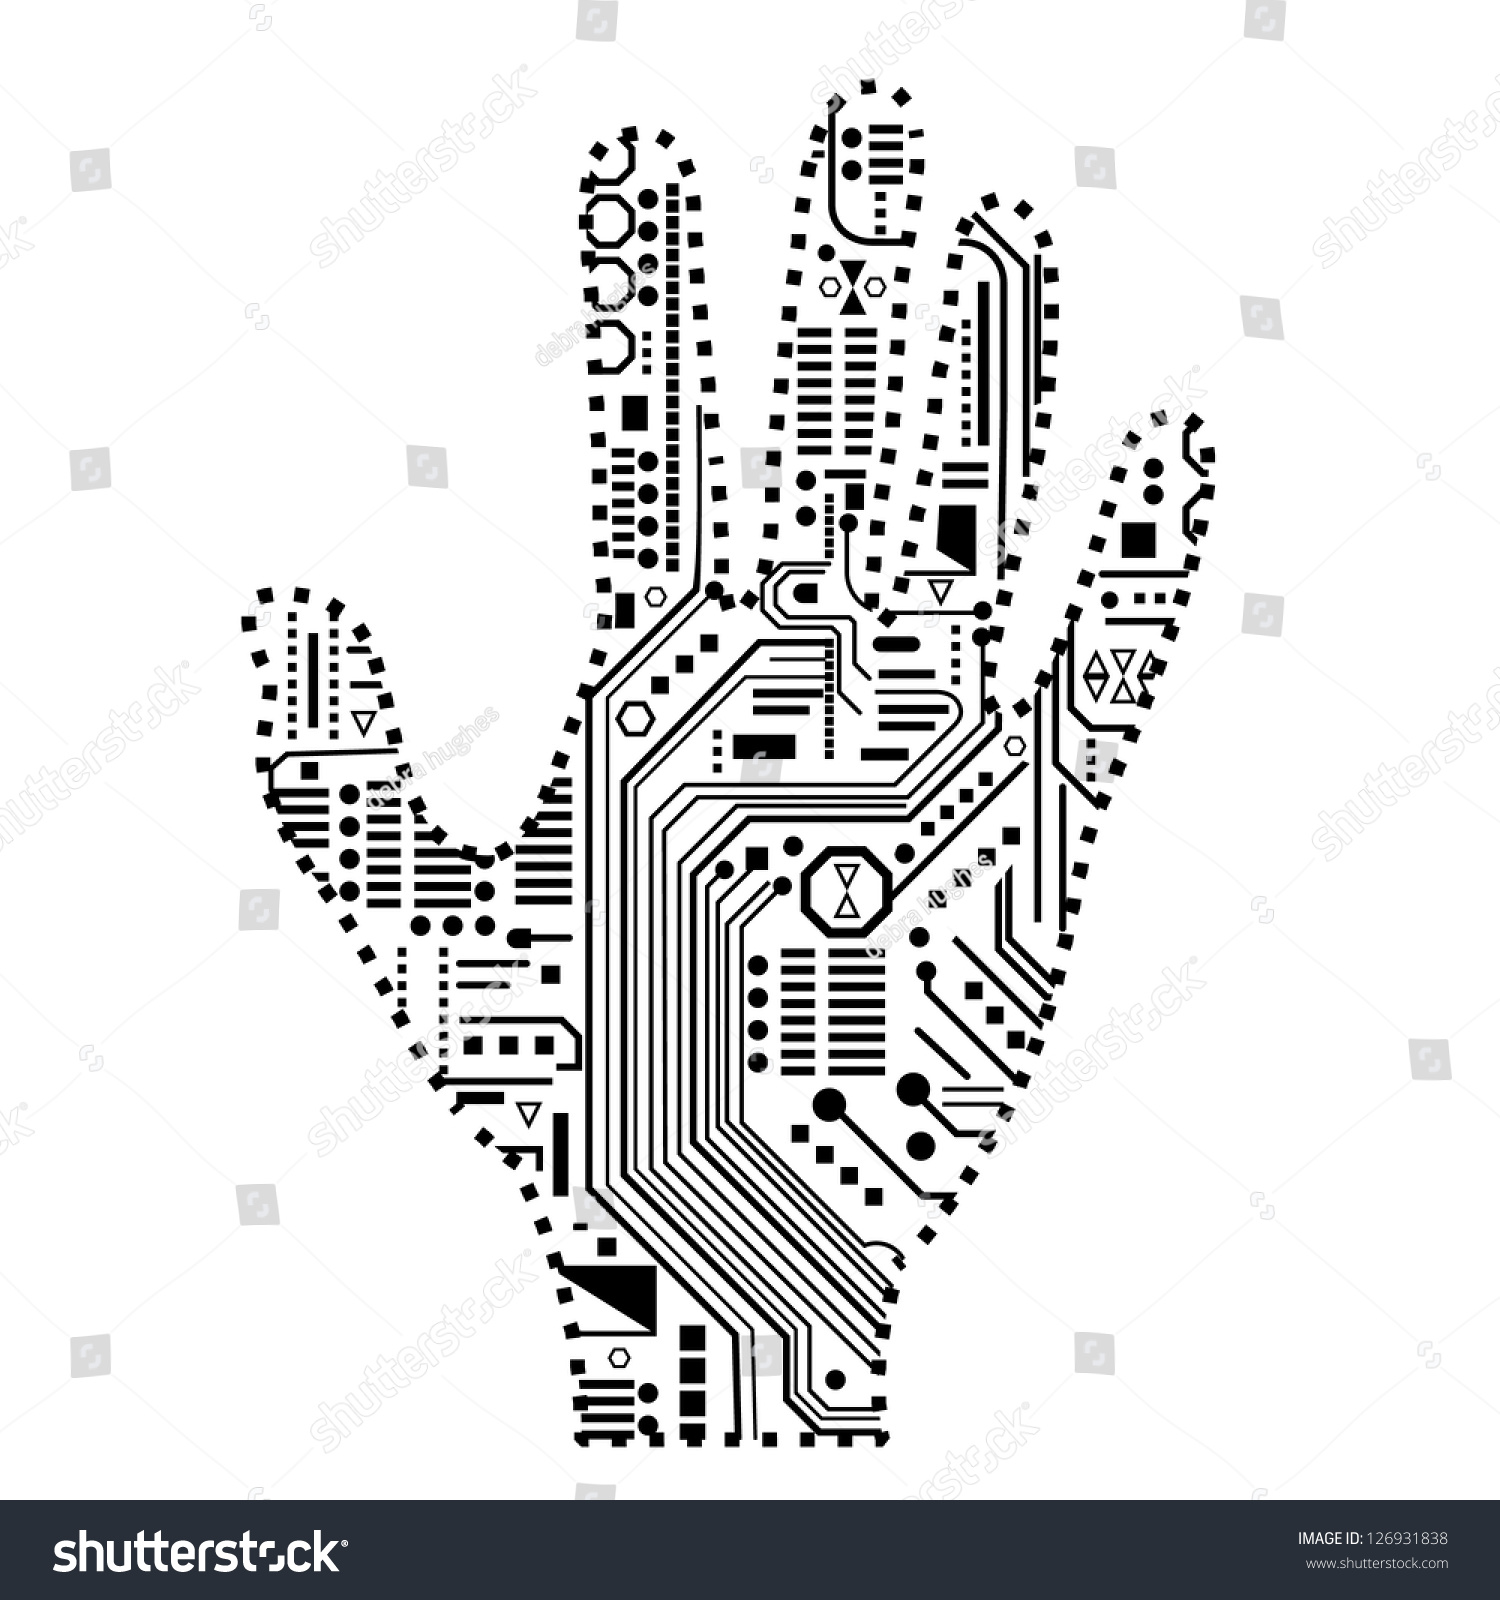 Robotic Hand Stock Vector Illustration 126931838 : Shutterstock